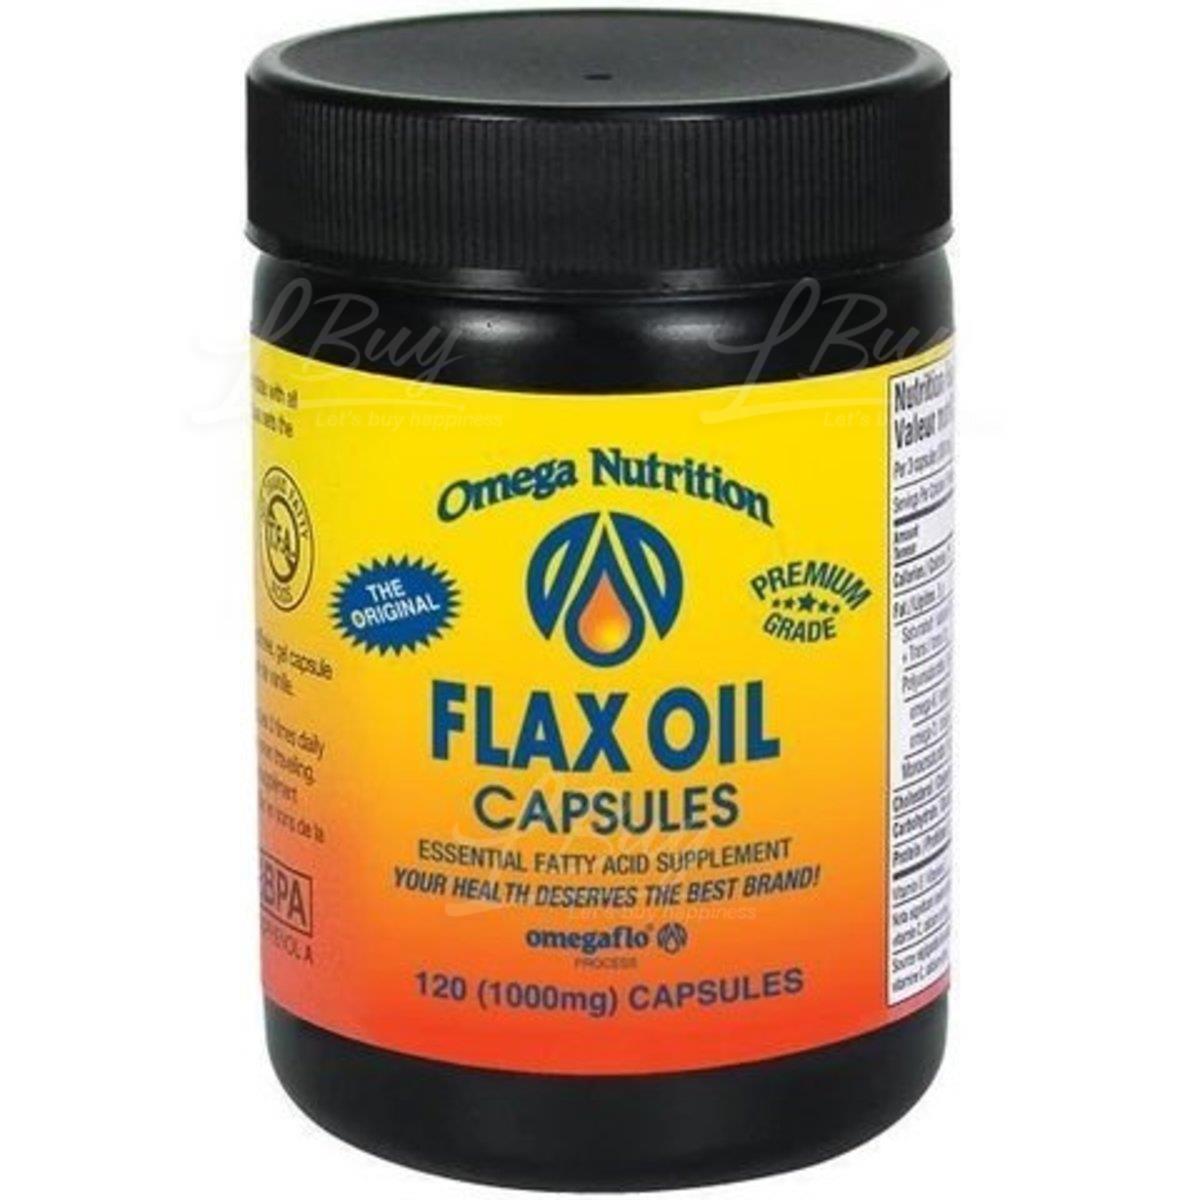 Omega Nutrition- Flax Oil Capsules 120 Capsules (1000mg each)